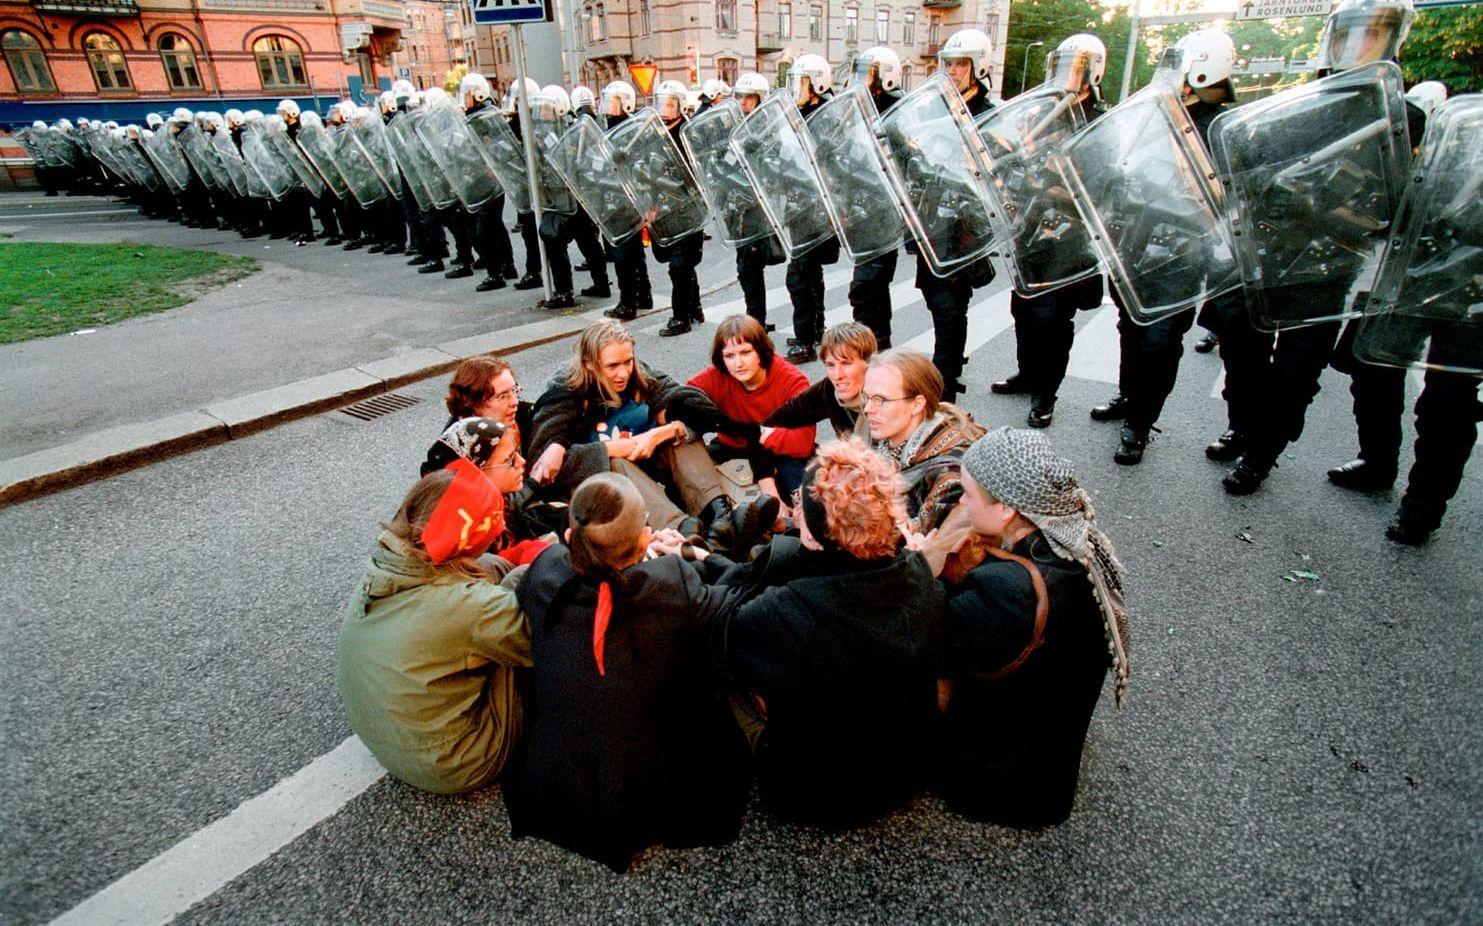 Fredliga demonstranter bildar en mur framför polisen. Bild: Stefan Berg